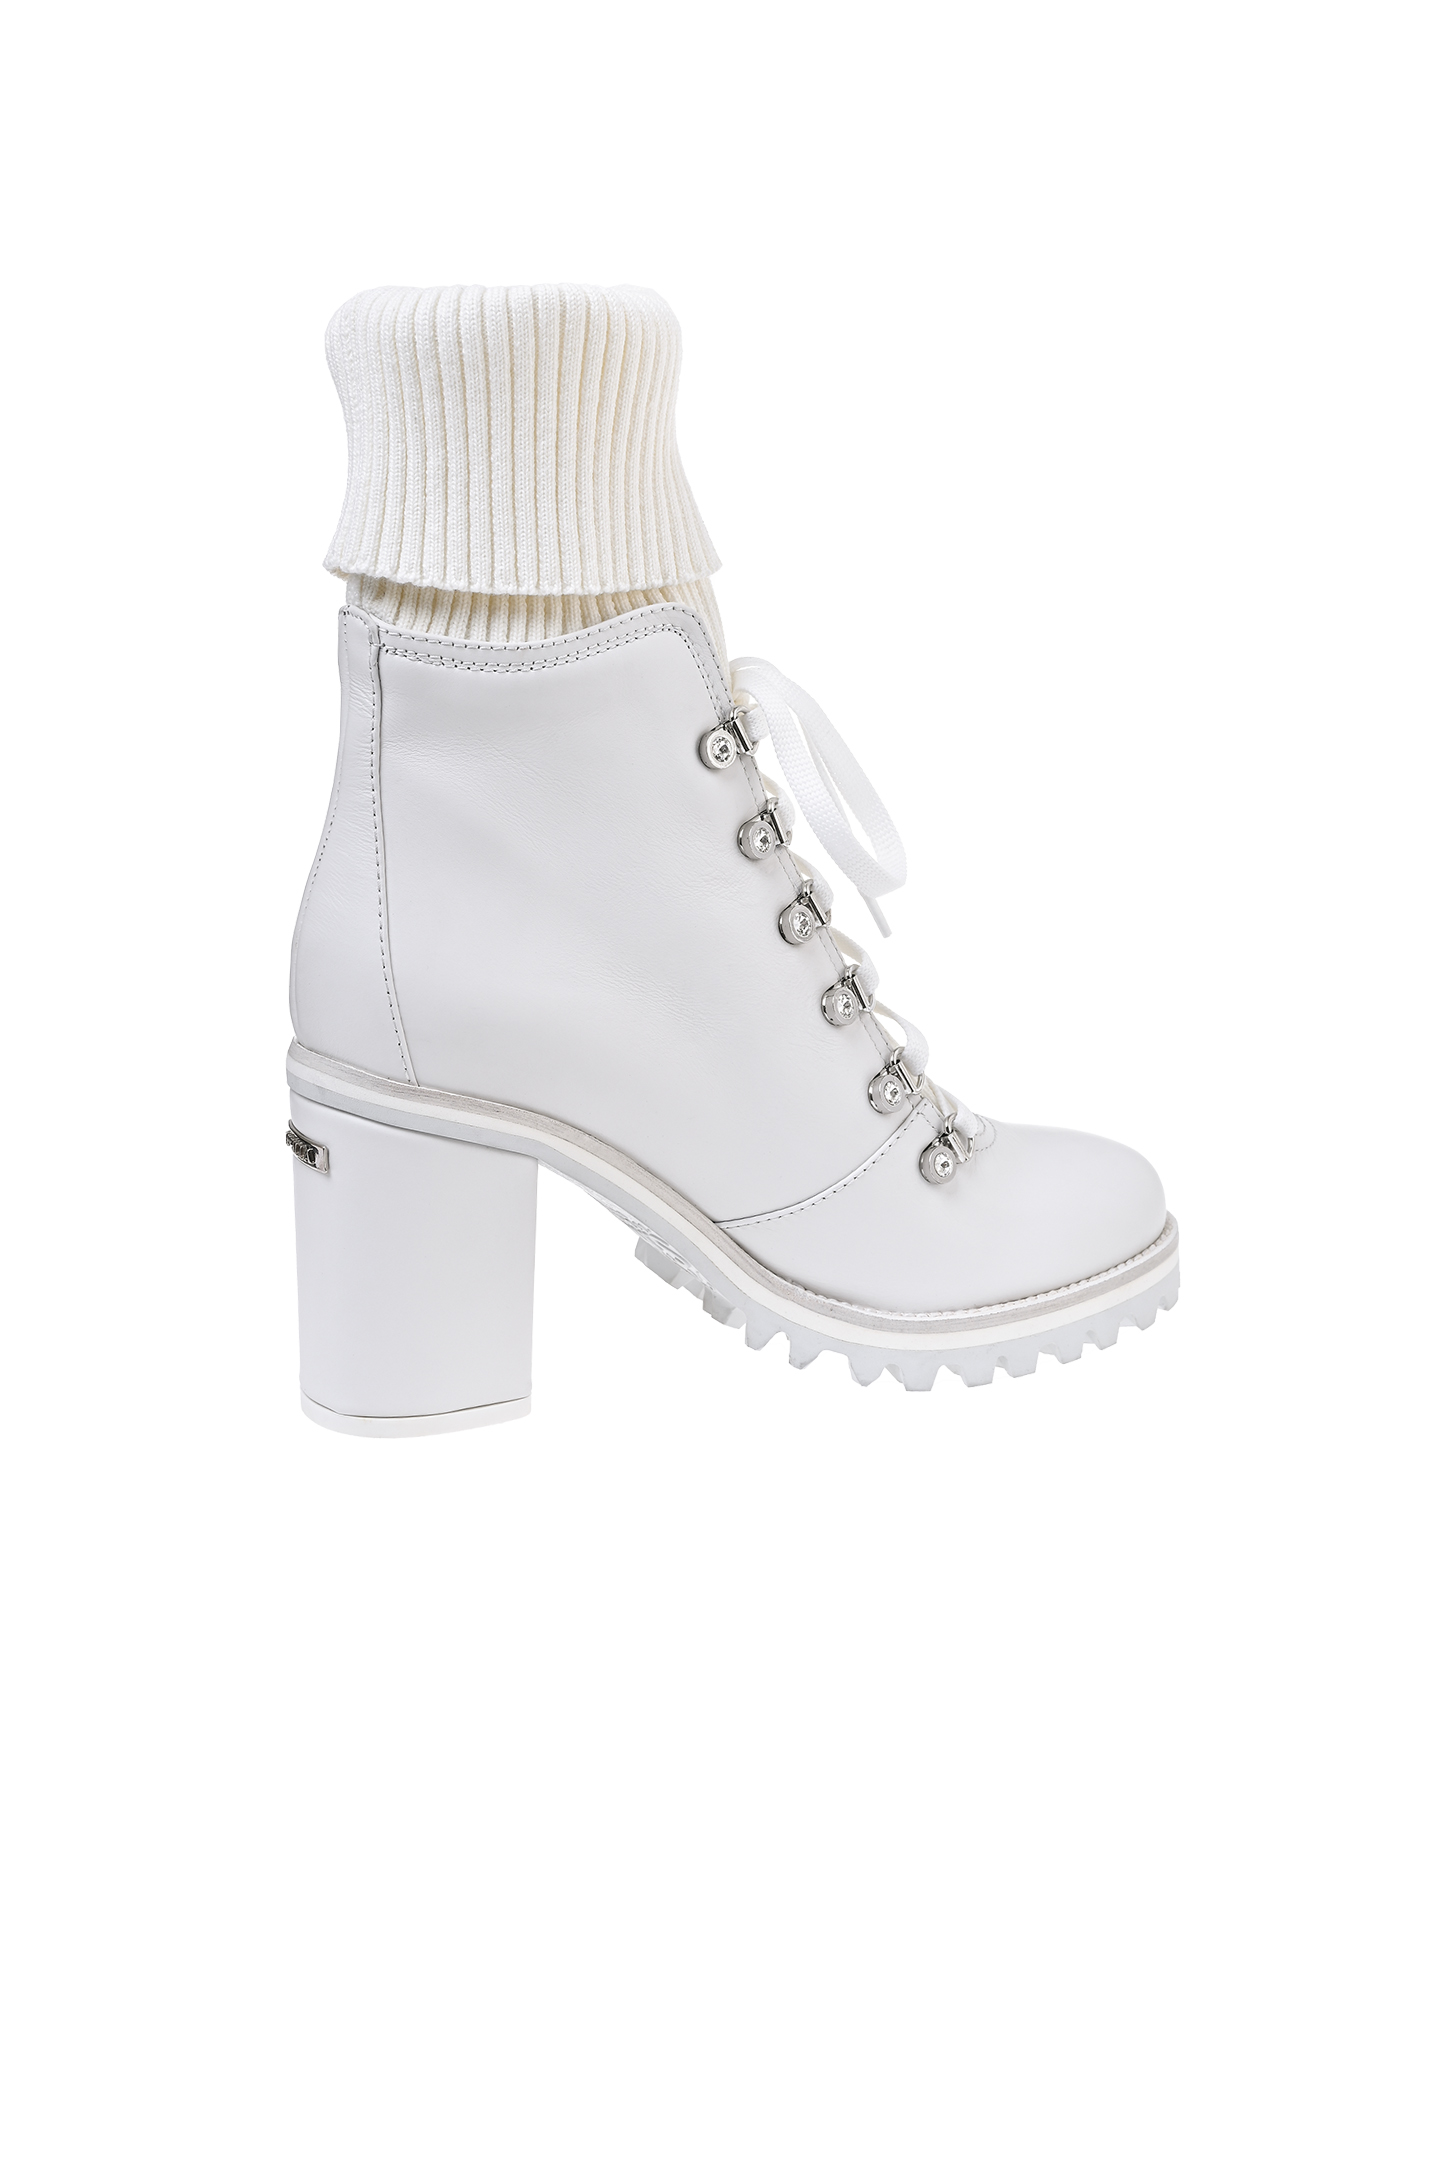 Ботинки LE SILLA 7406R080M1PPCH, цвет: Белый, Женский